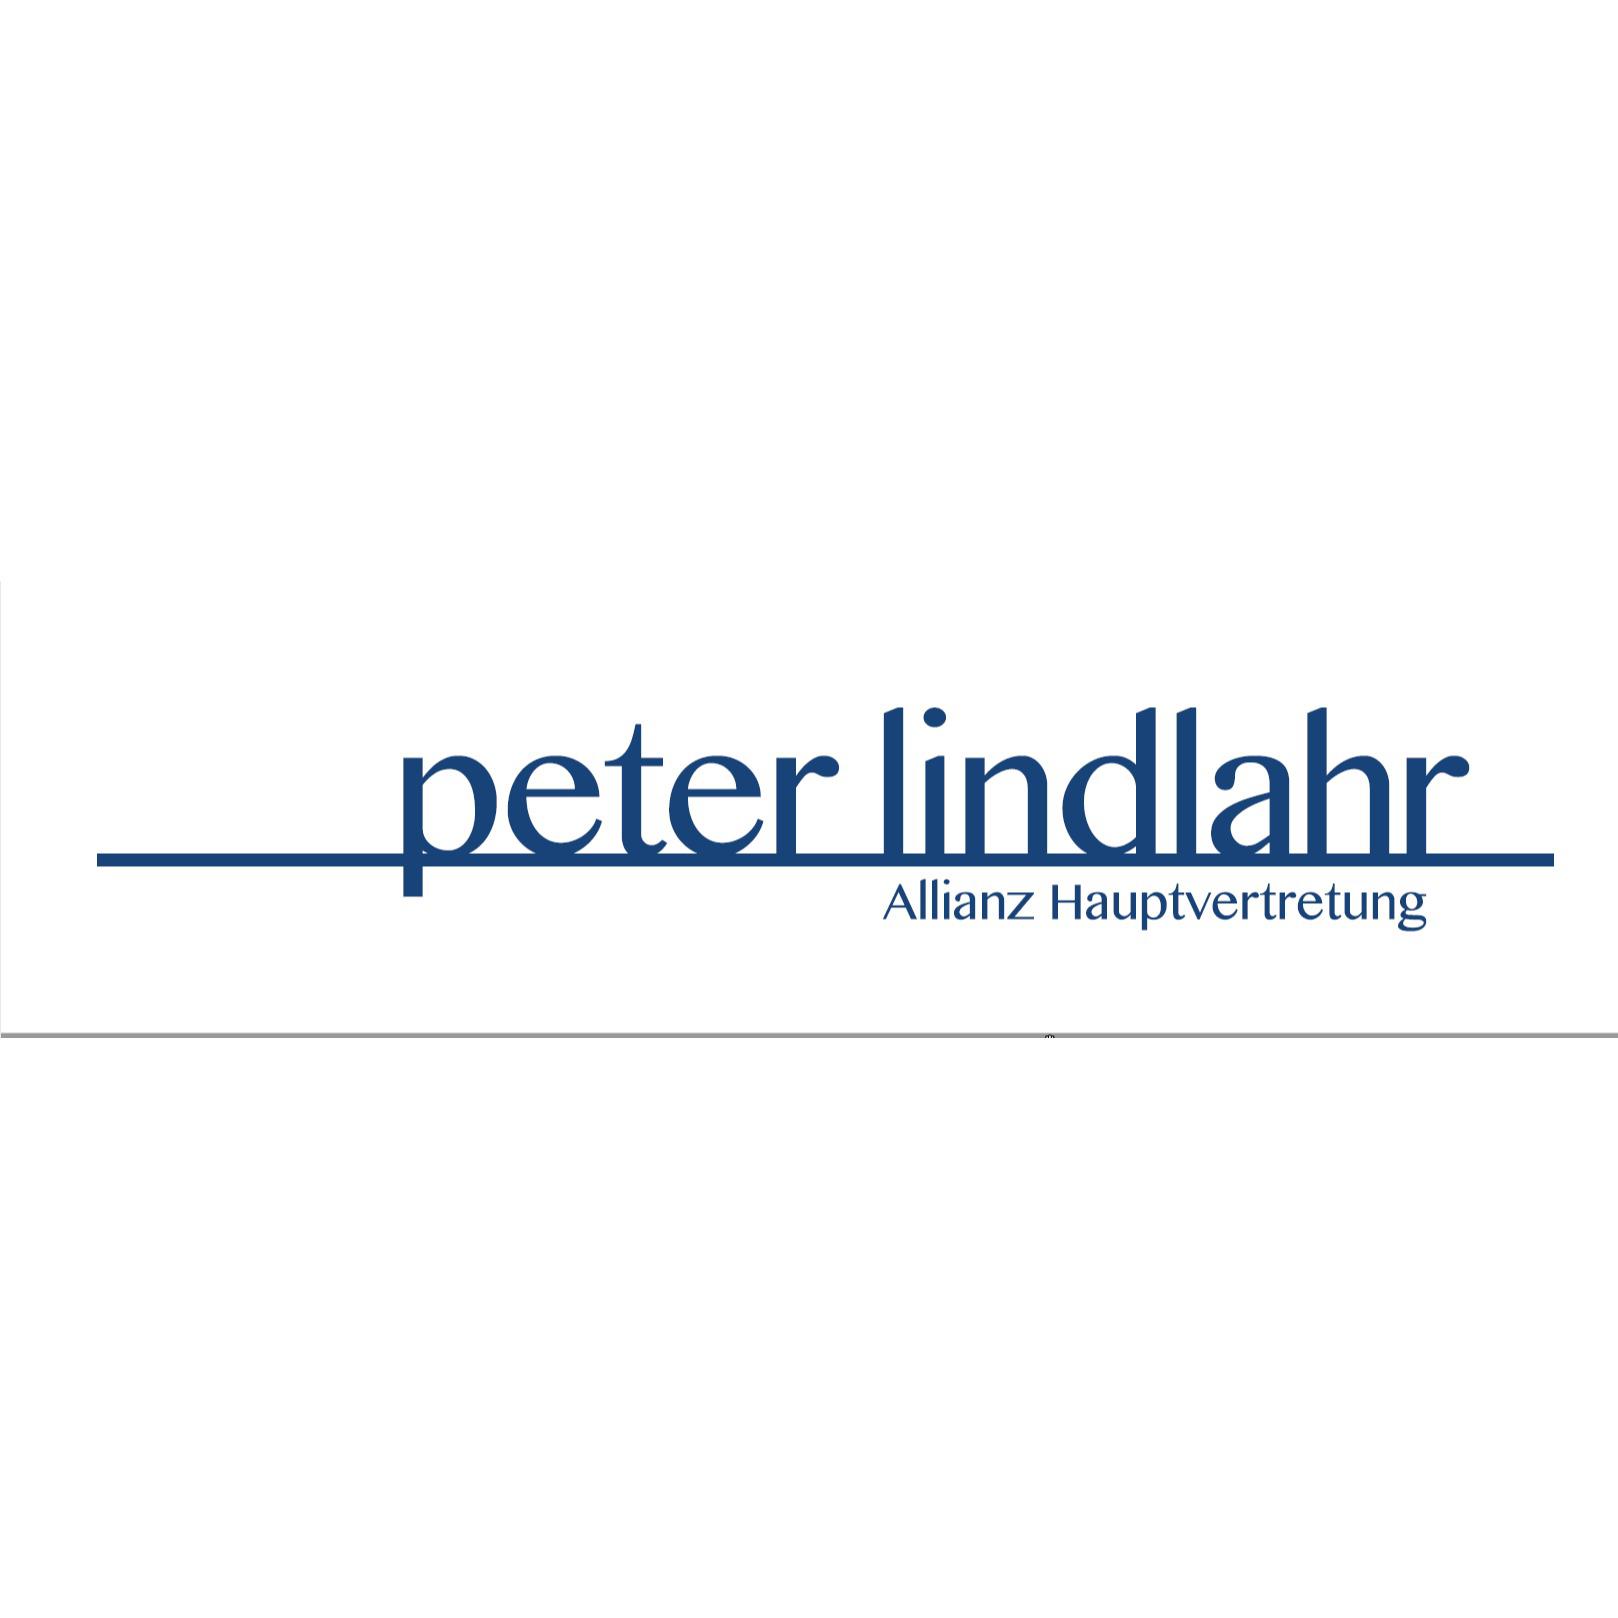 Allianz Hauptvertretung - Peter Lindlahr in Bonn - Logo